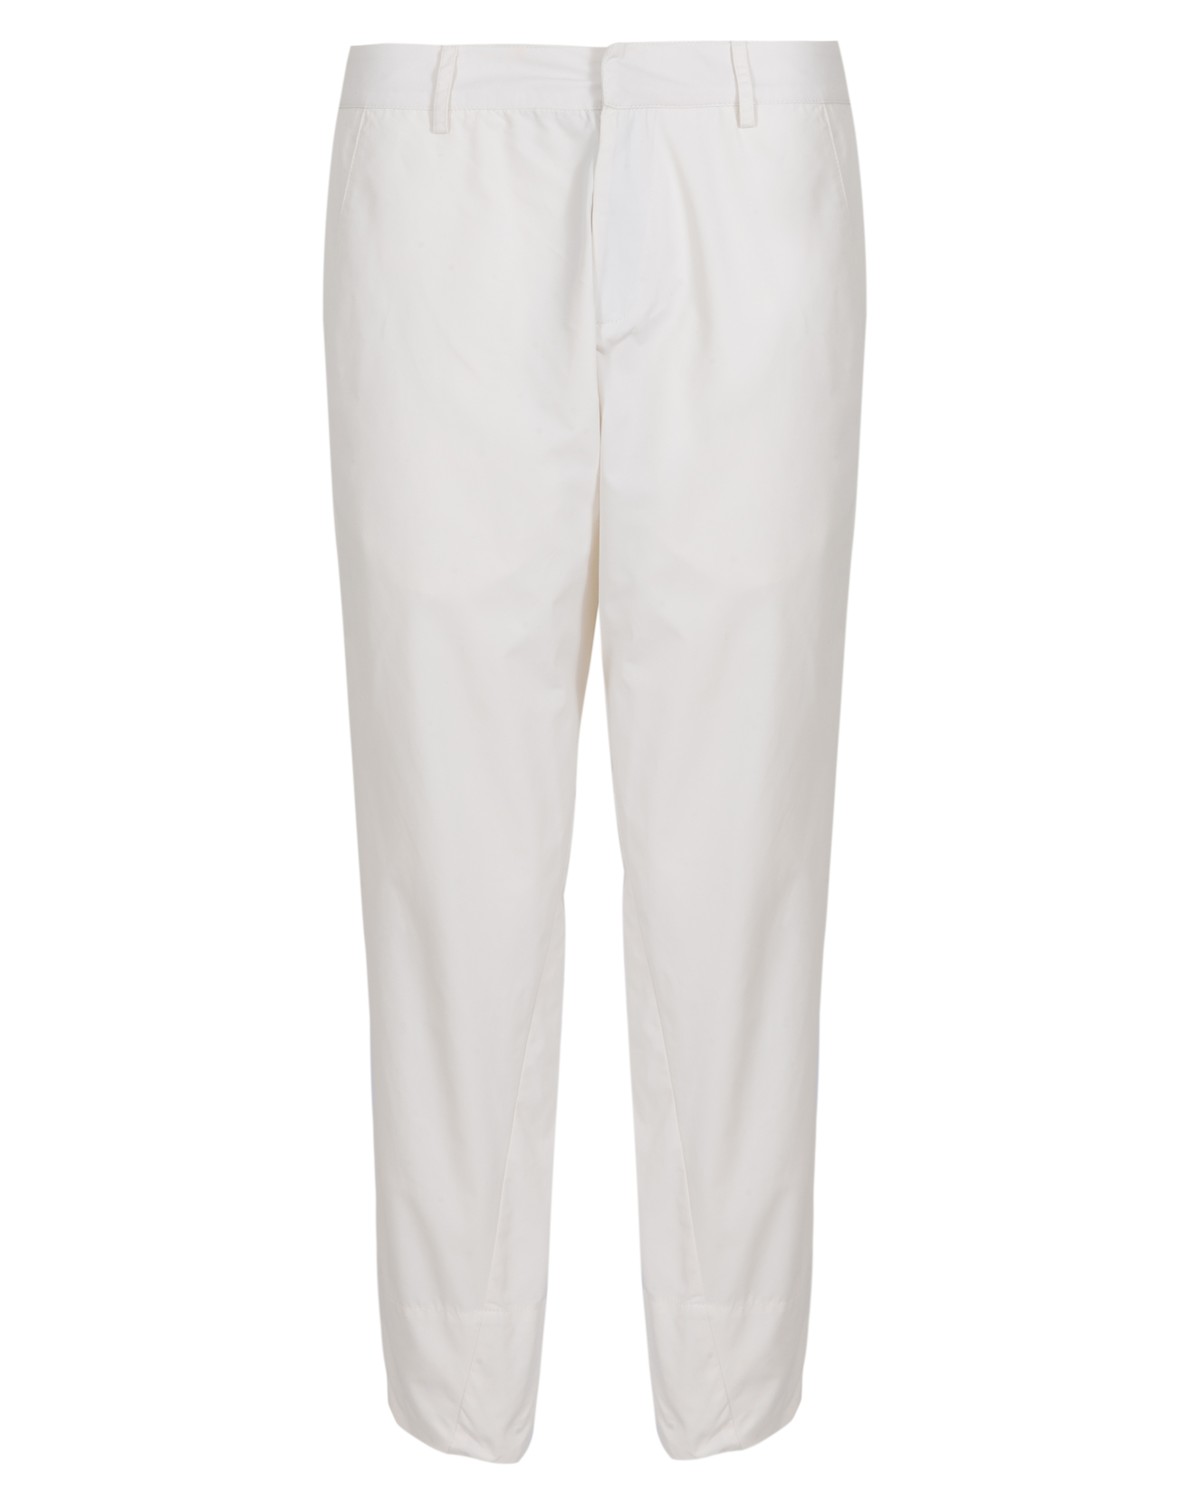 calça alfaiataria em nylon  | nylon tailored pants